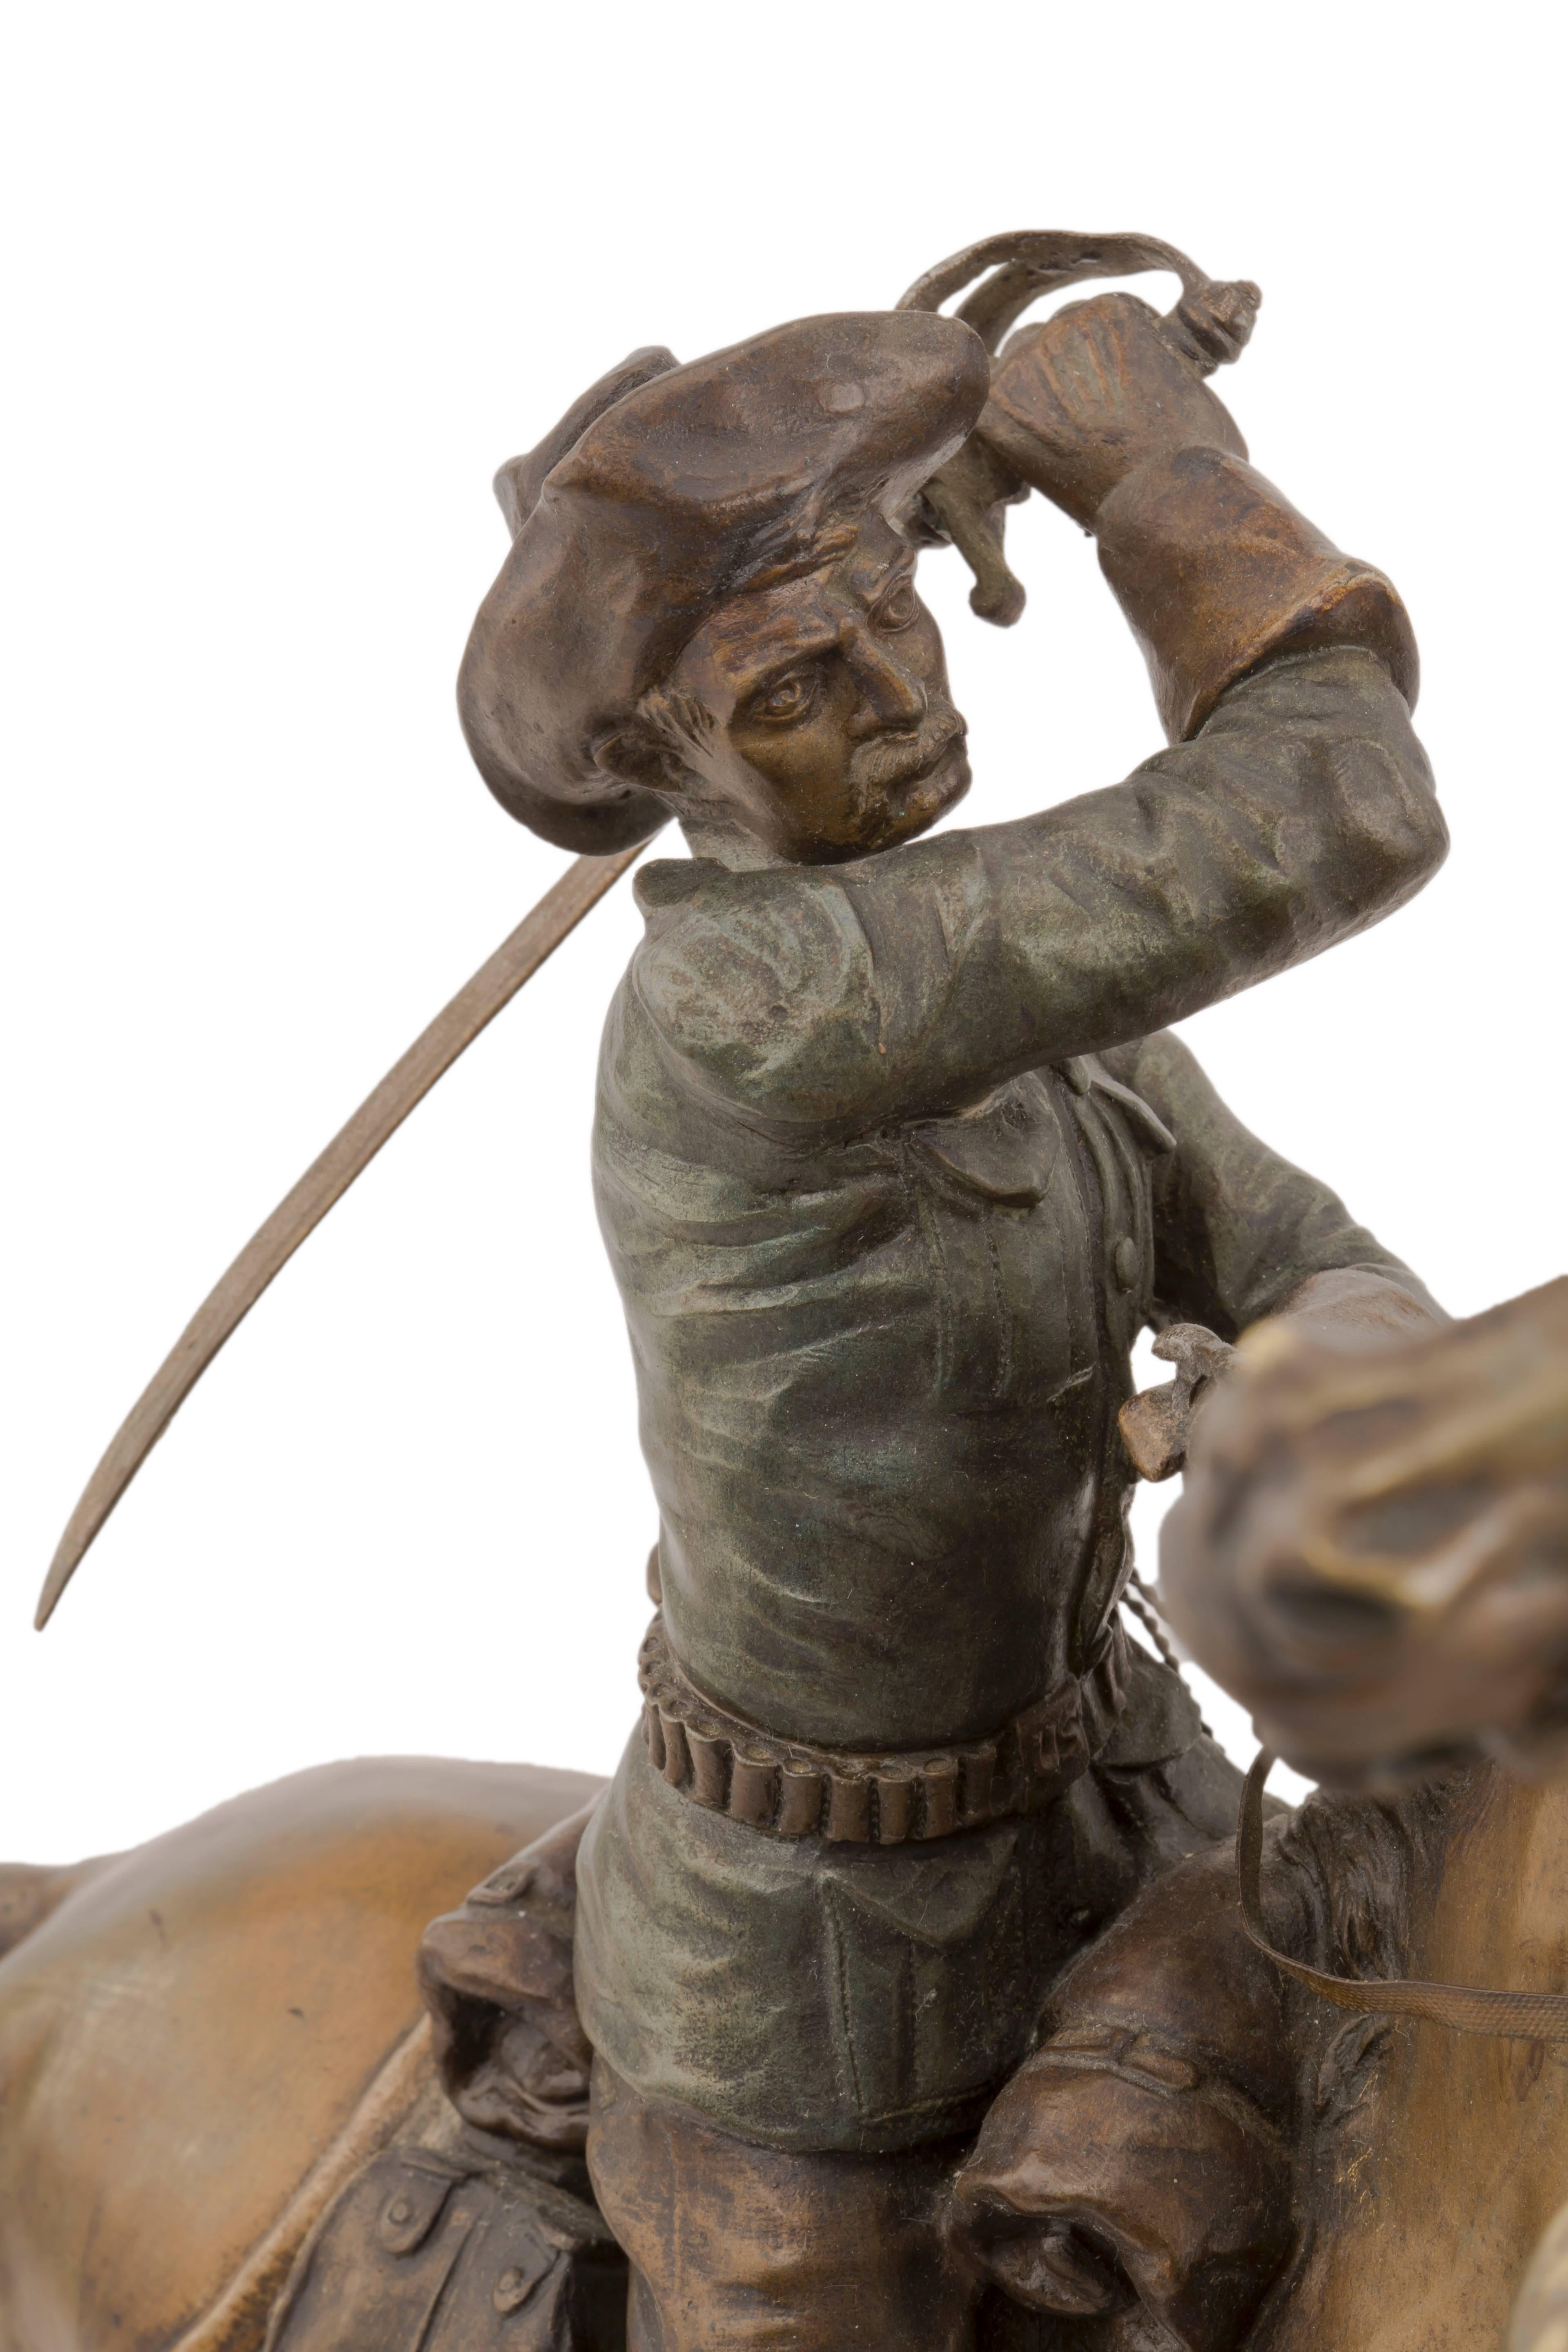 Austrian Cowboy and Indian Sculpture by, Carl Kauba